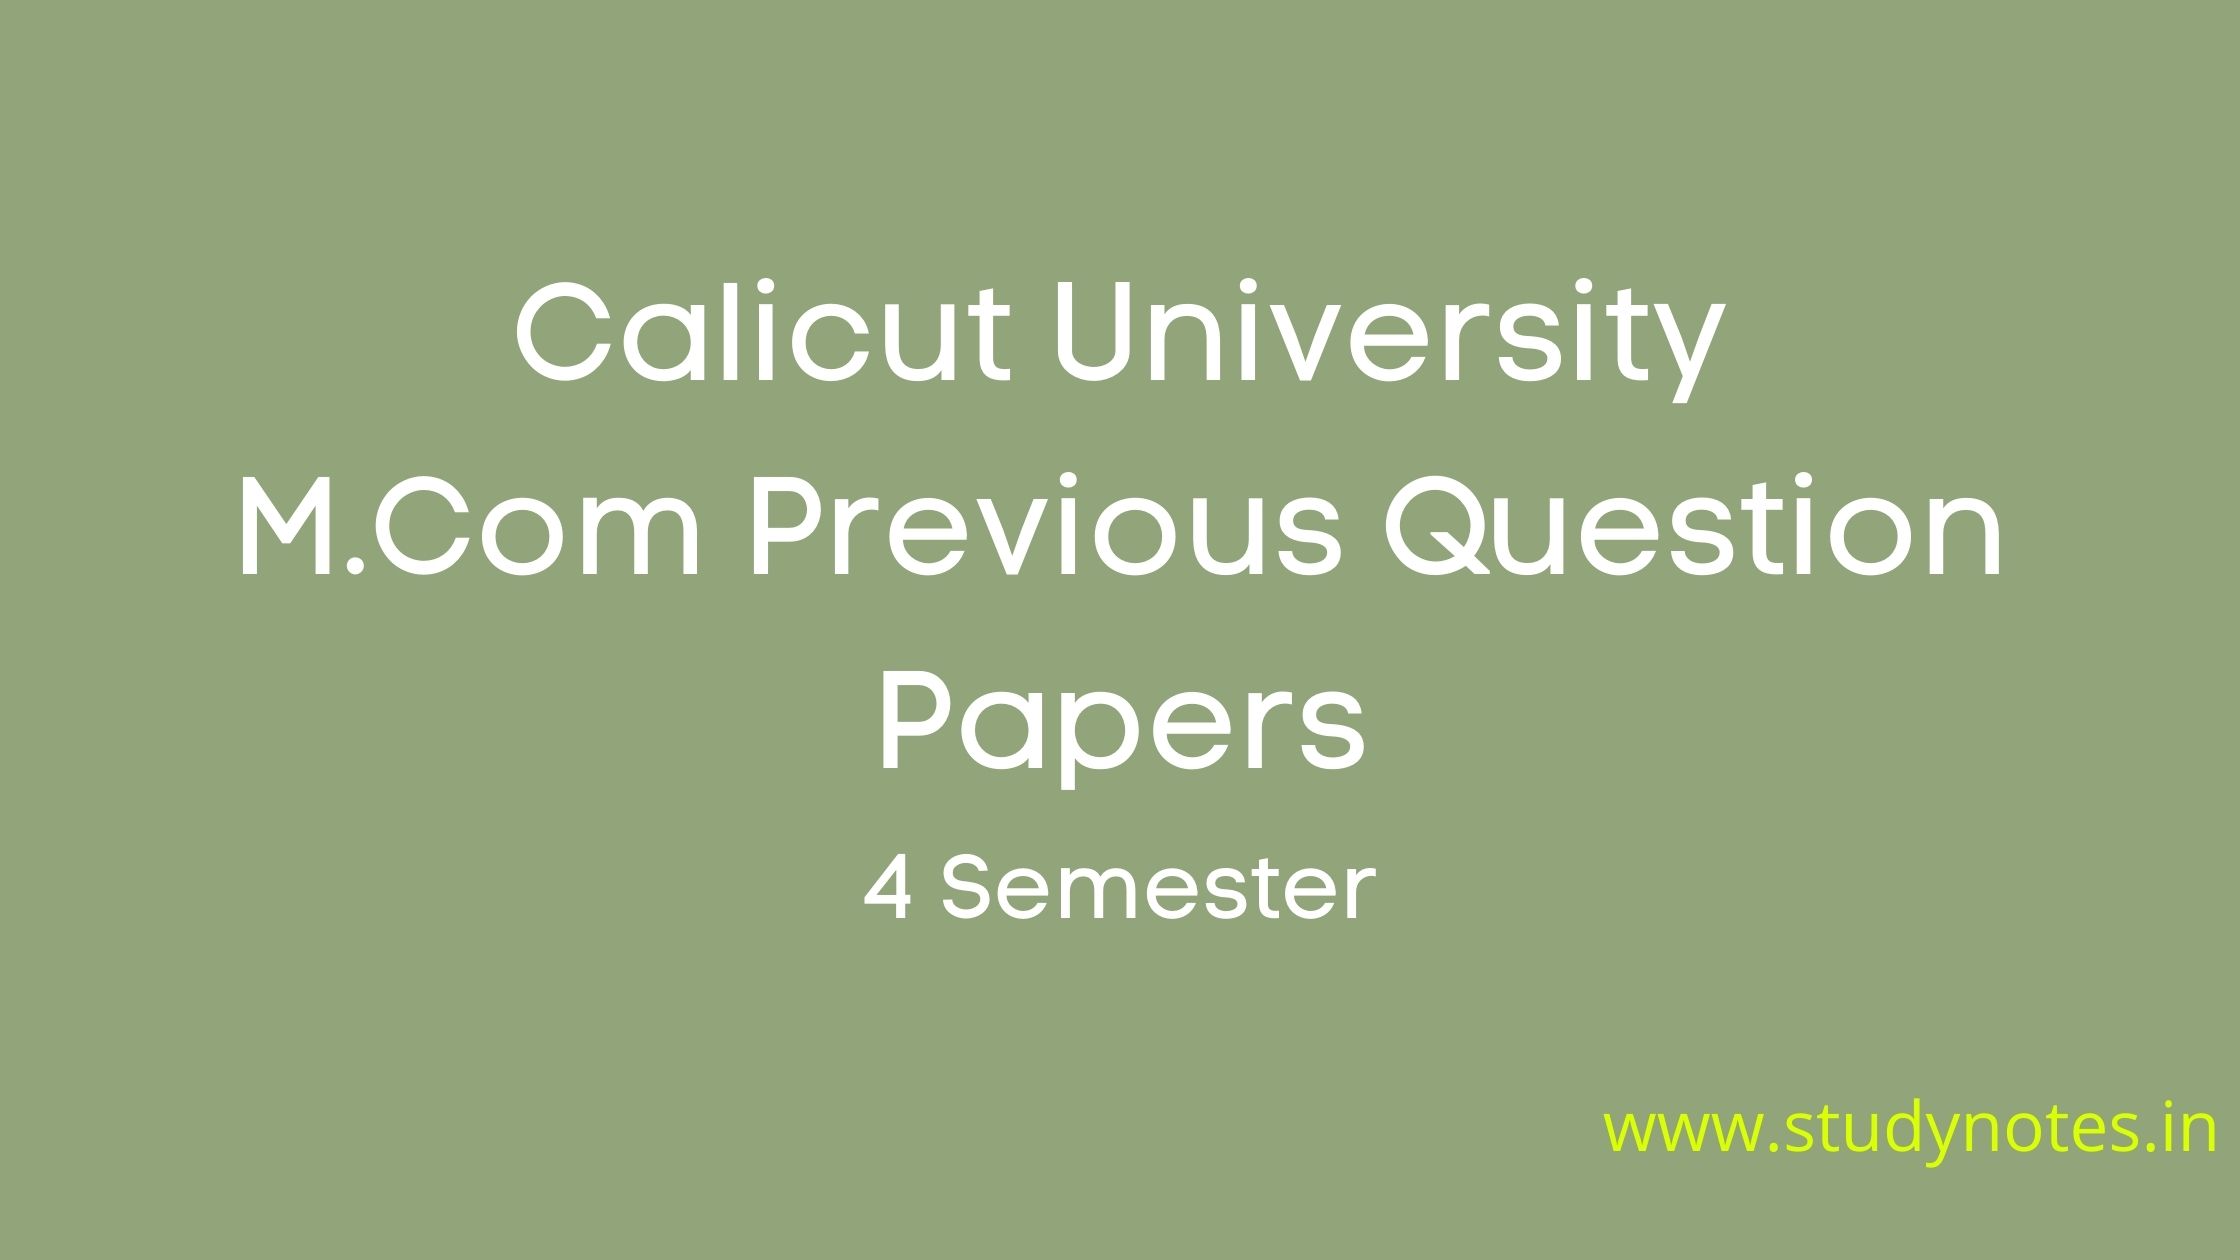 Fourth Semester M.Com Previous Question Paper Of Calicut University